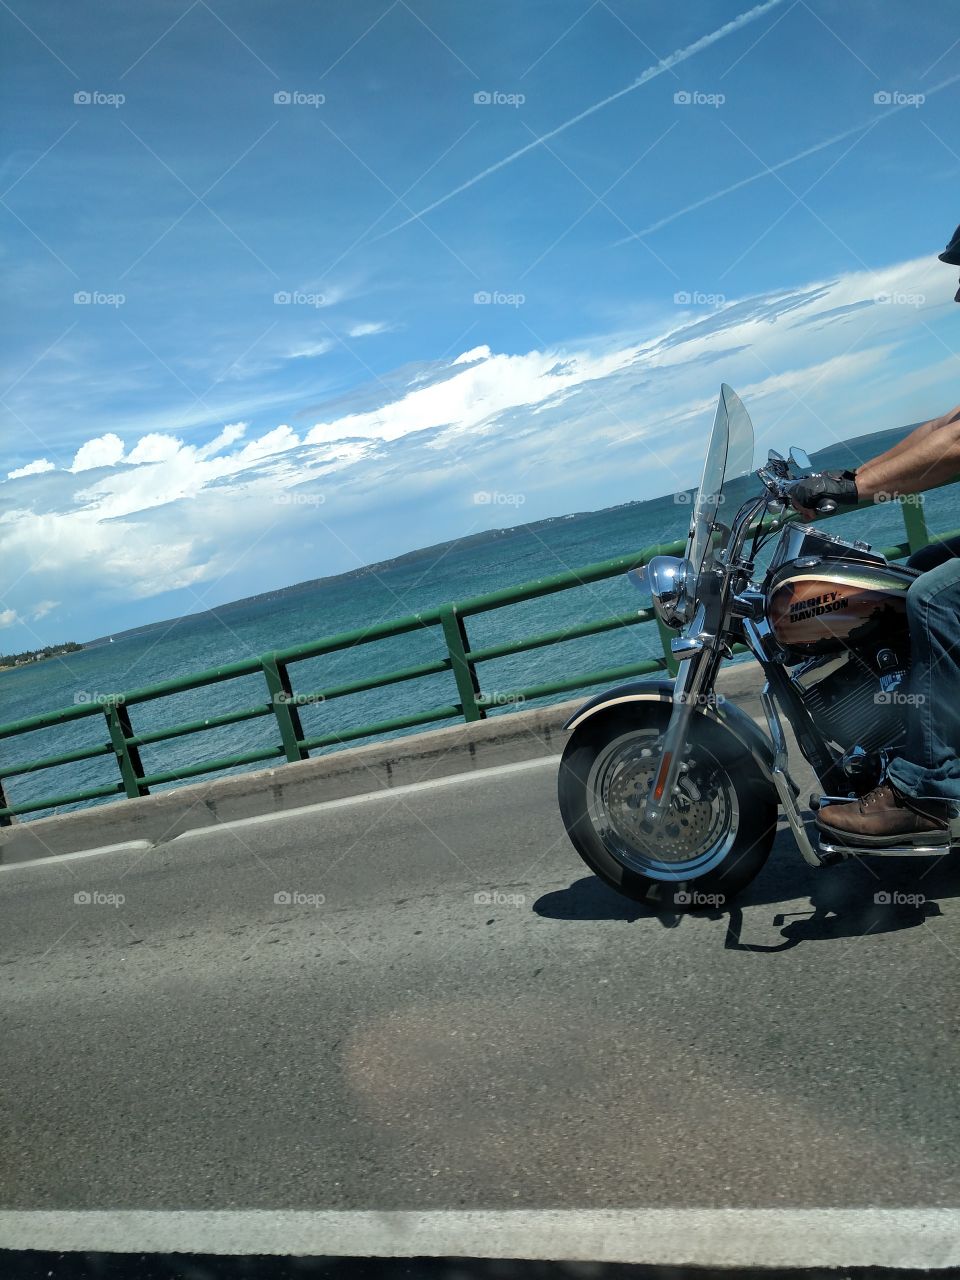 Motorcycle on the Mac. saw this biker enjoying the summer cruise across the bridge.